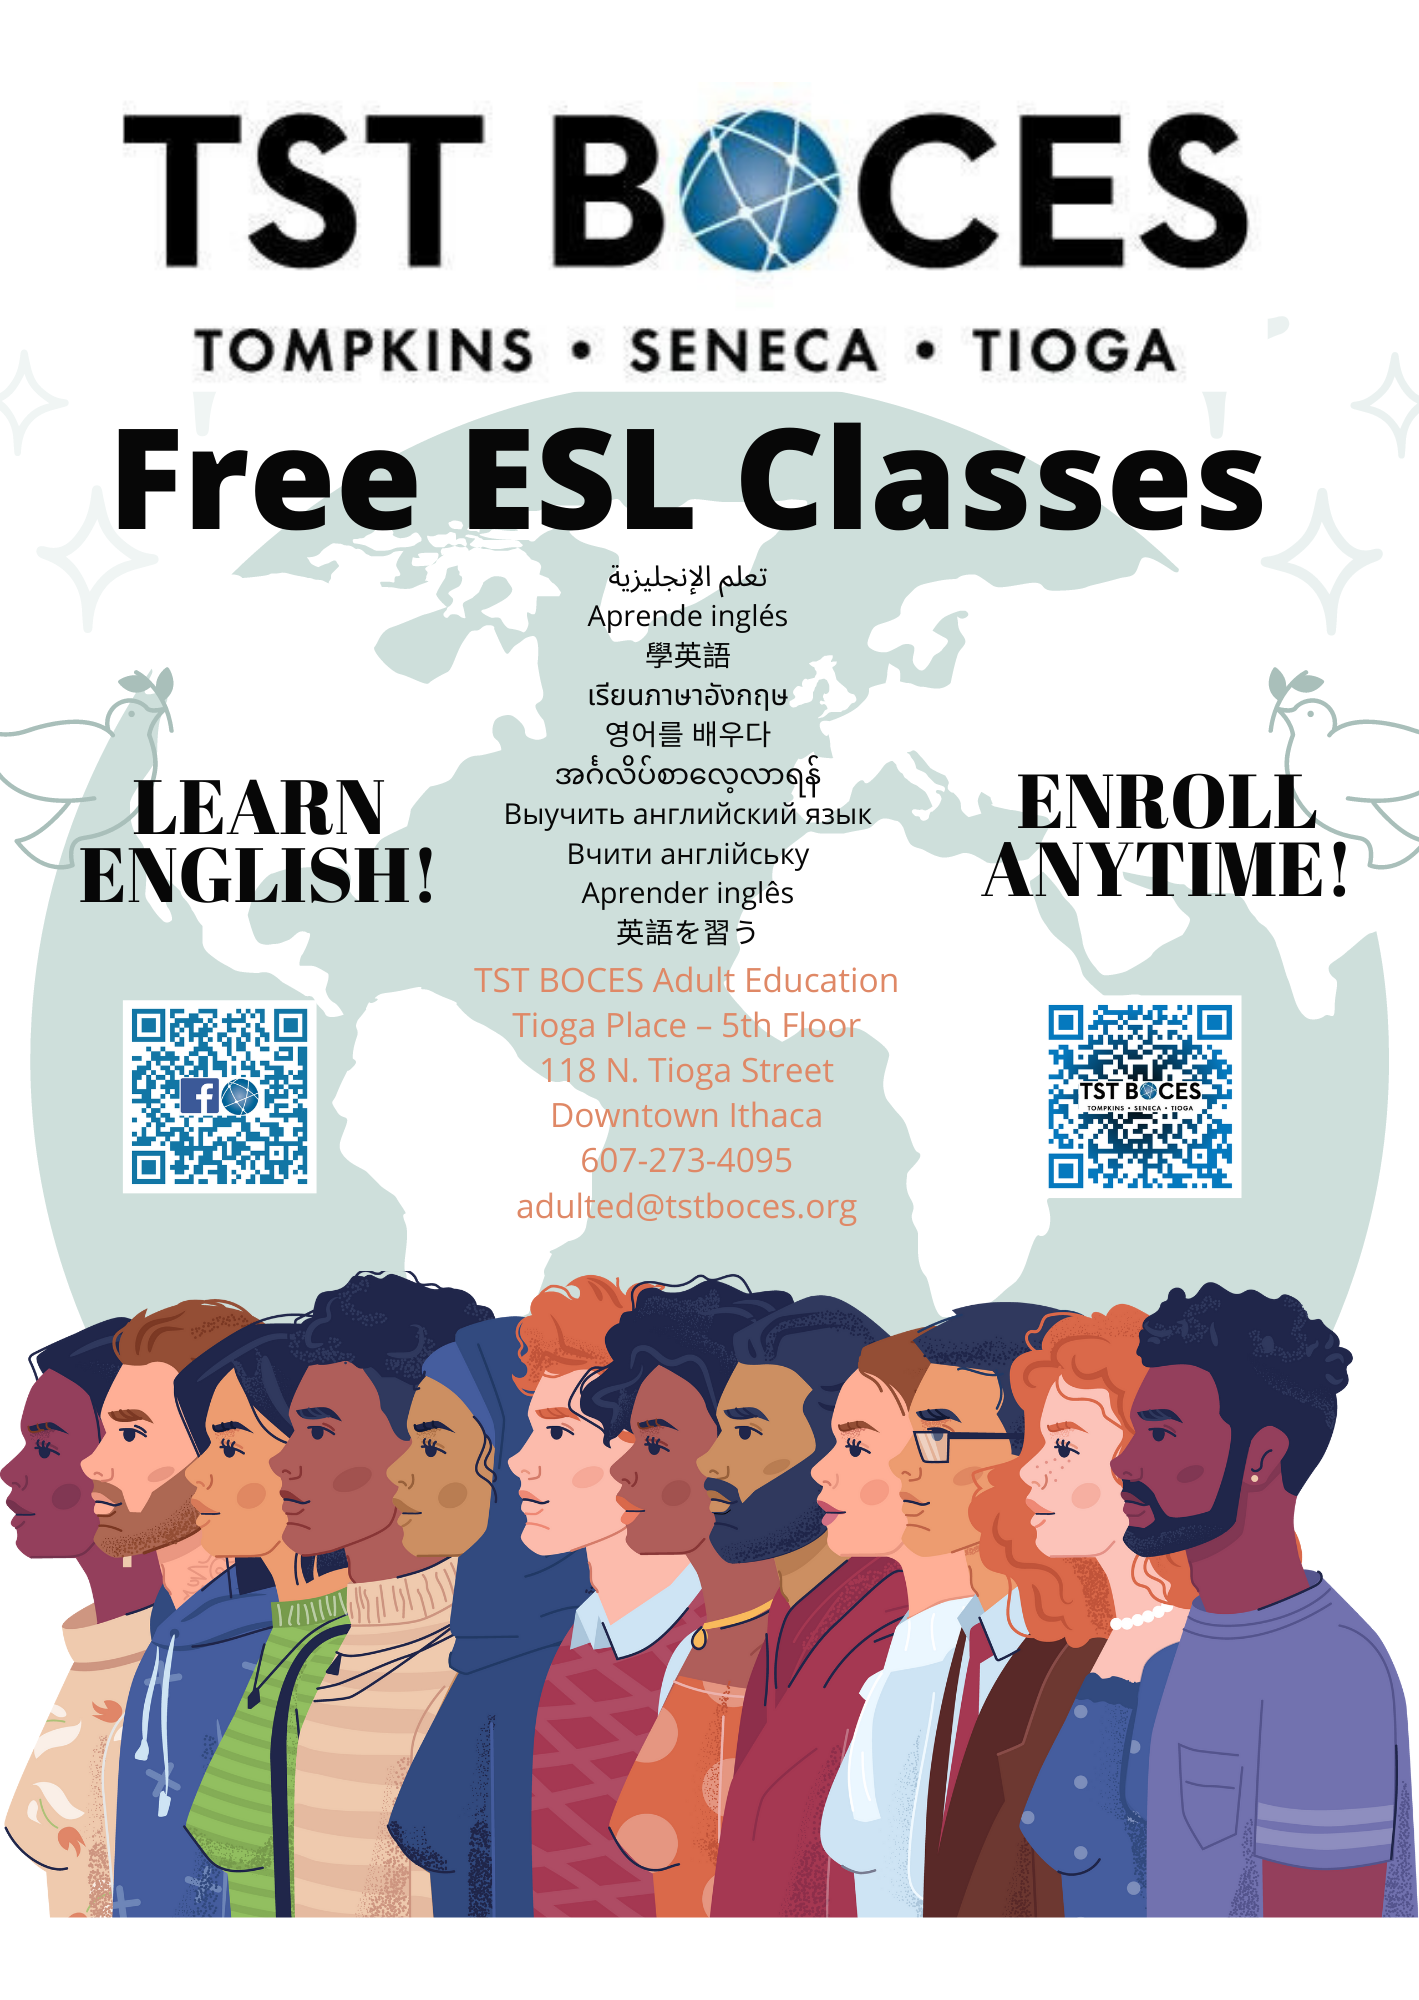 TST BOCES Free ESL Classes Learn English